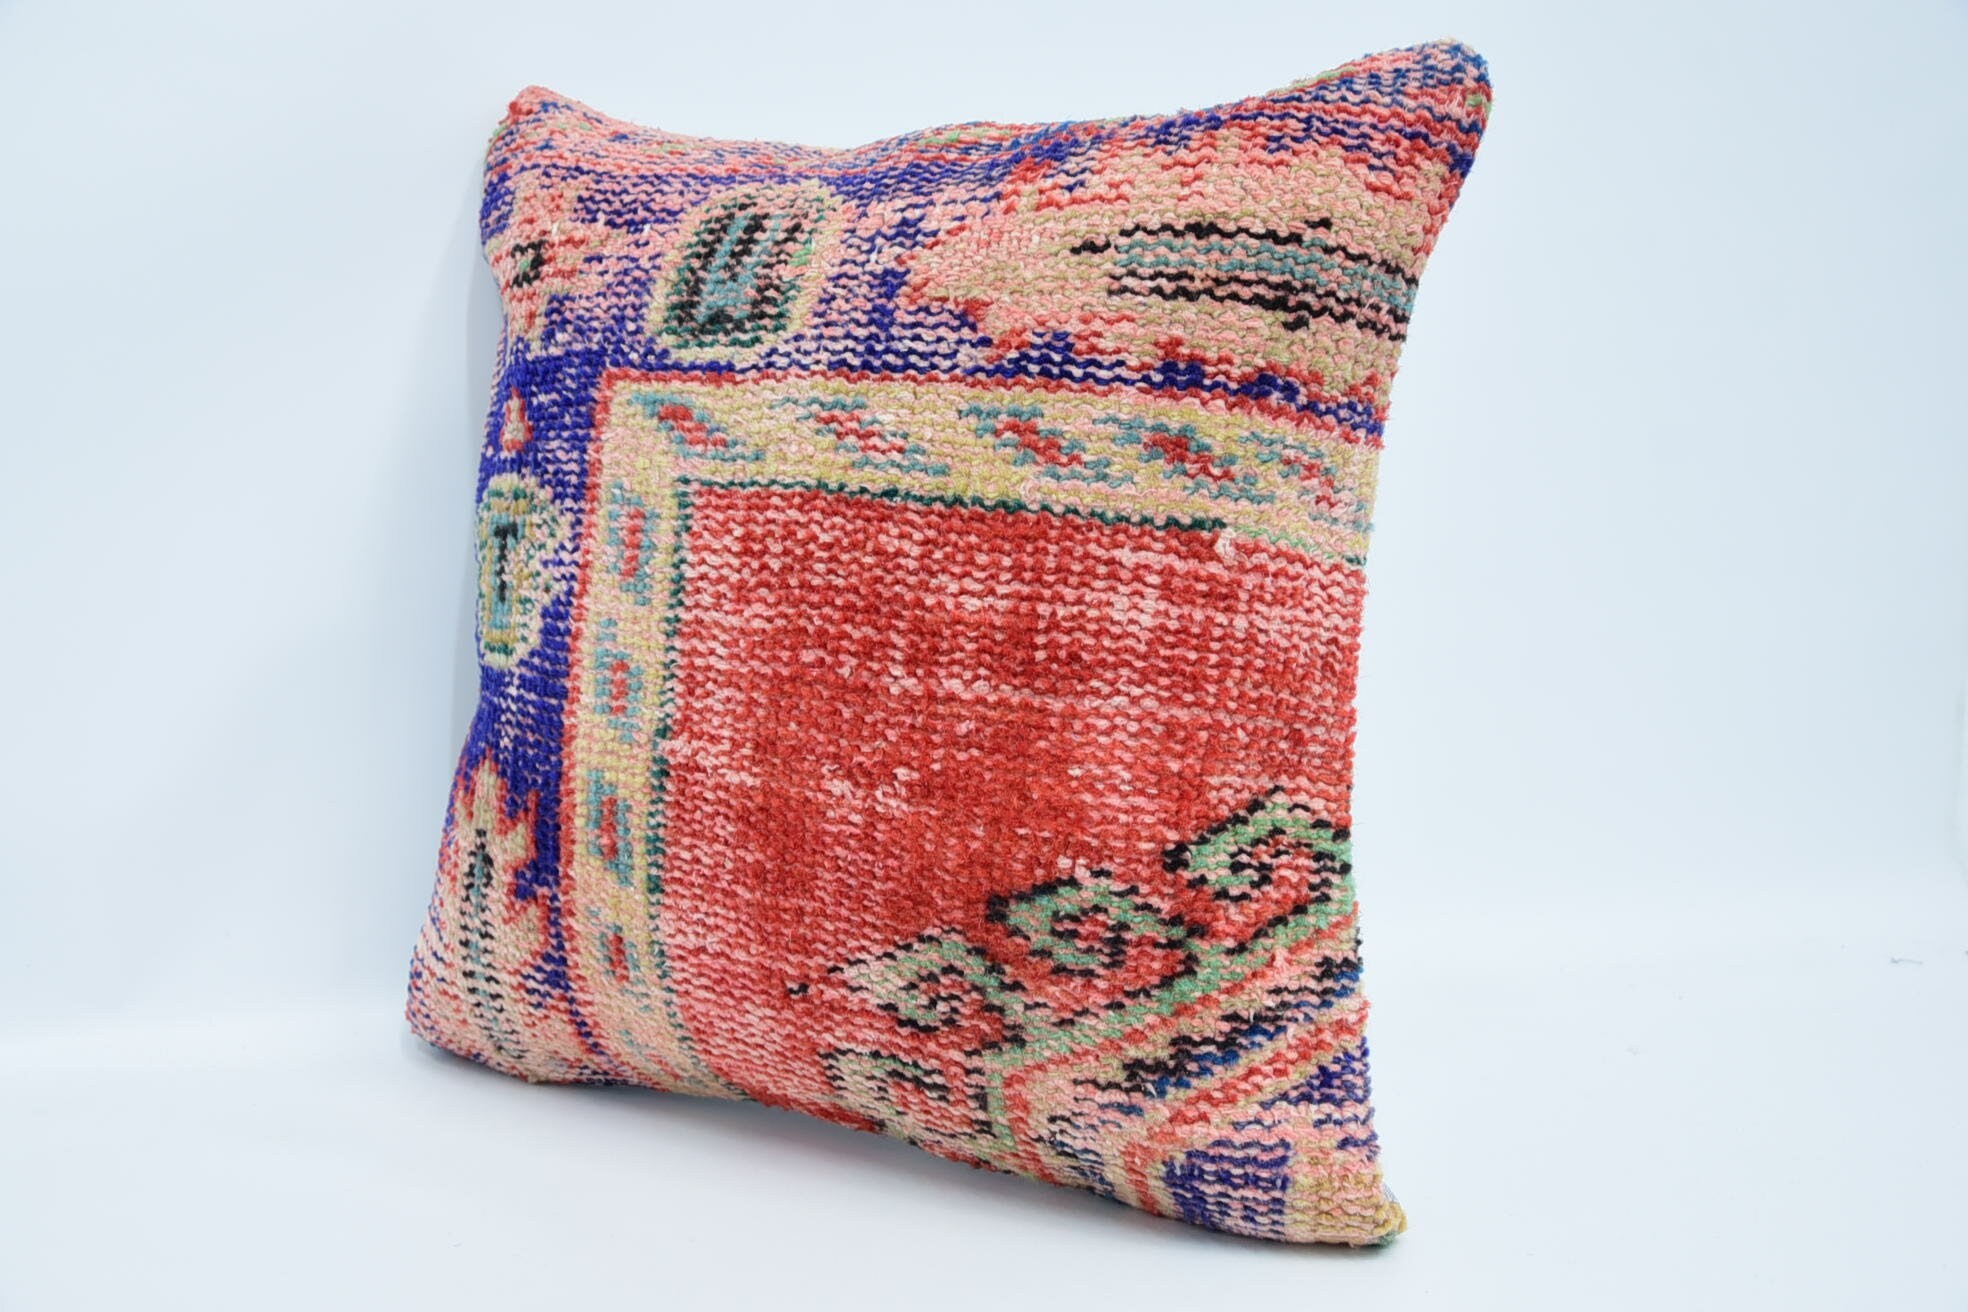 Pillow for Sofa, Gift Pillow, Handmade Kilim Cushion, Bolster Cushion Cover, 18"x18" Red Pillow, Office Chair Pillow Case